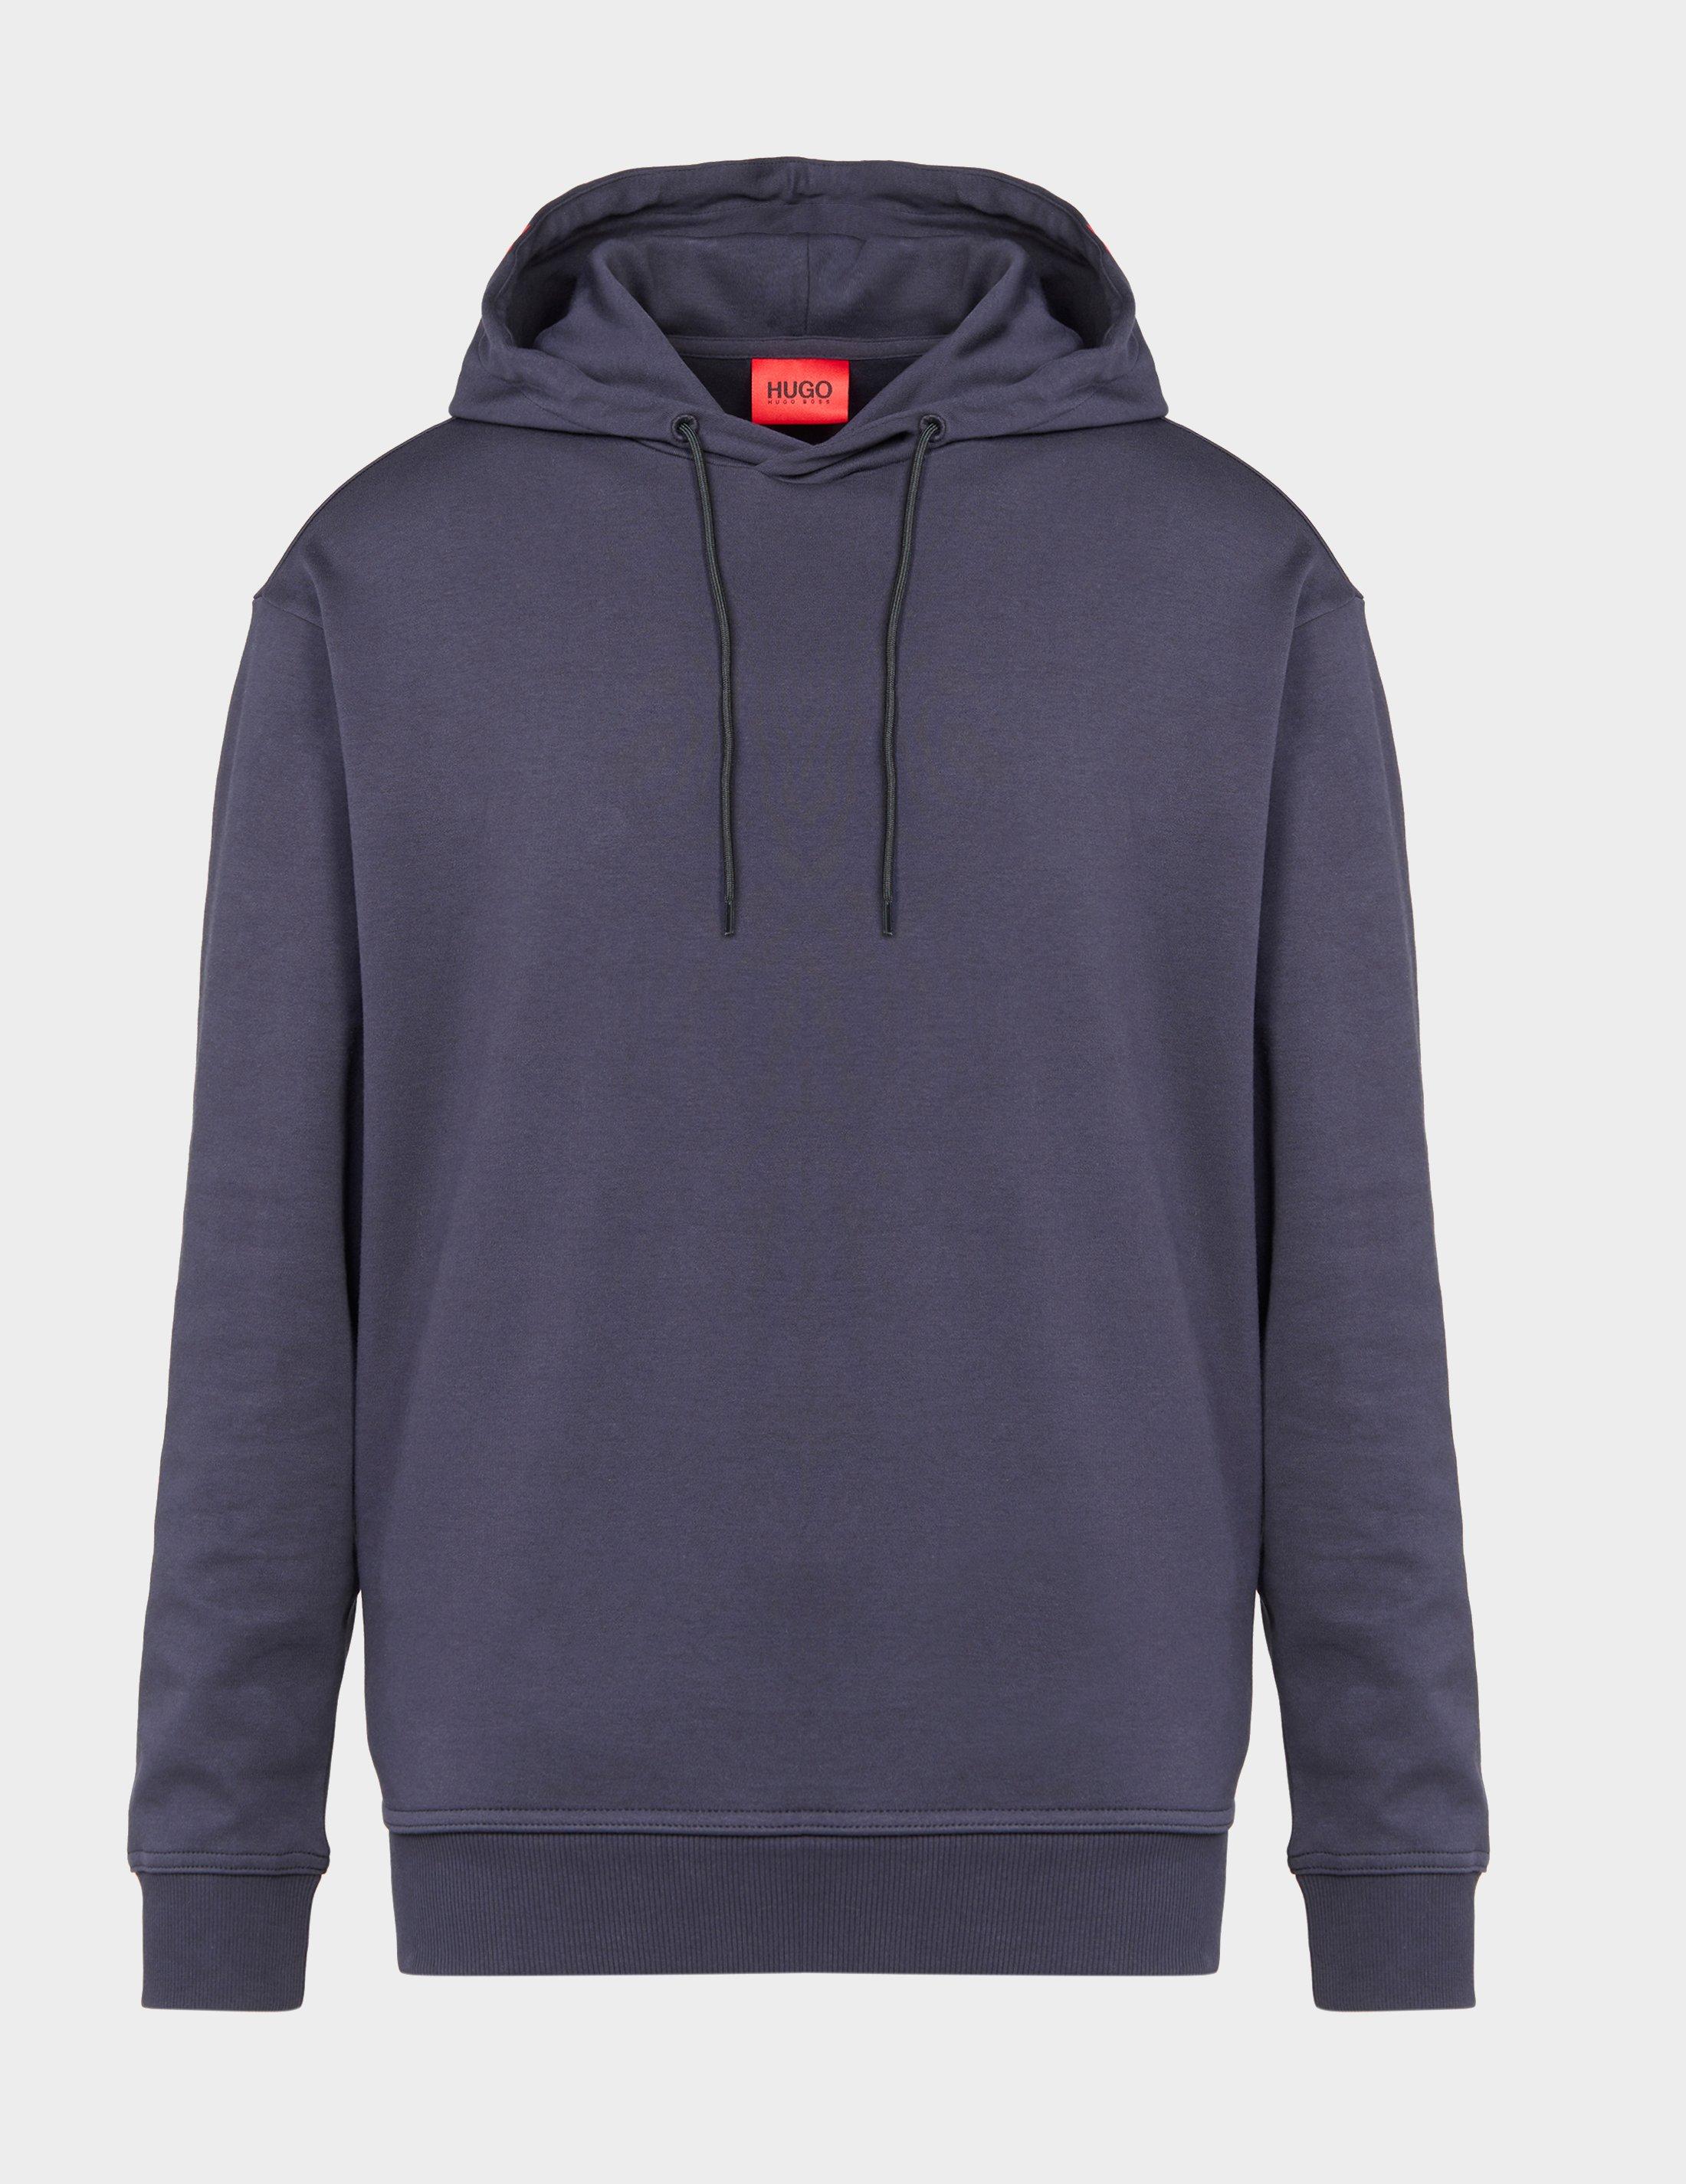 Hugo Hooded Sweatshirt Flash Sales, SAVE 52%.